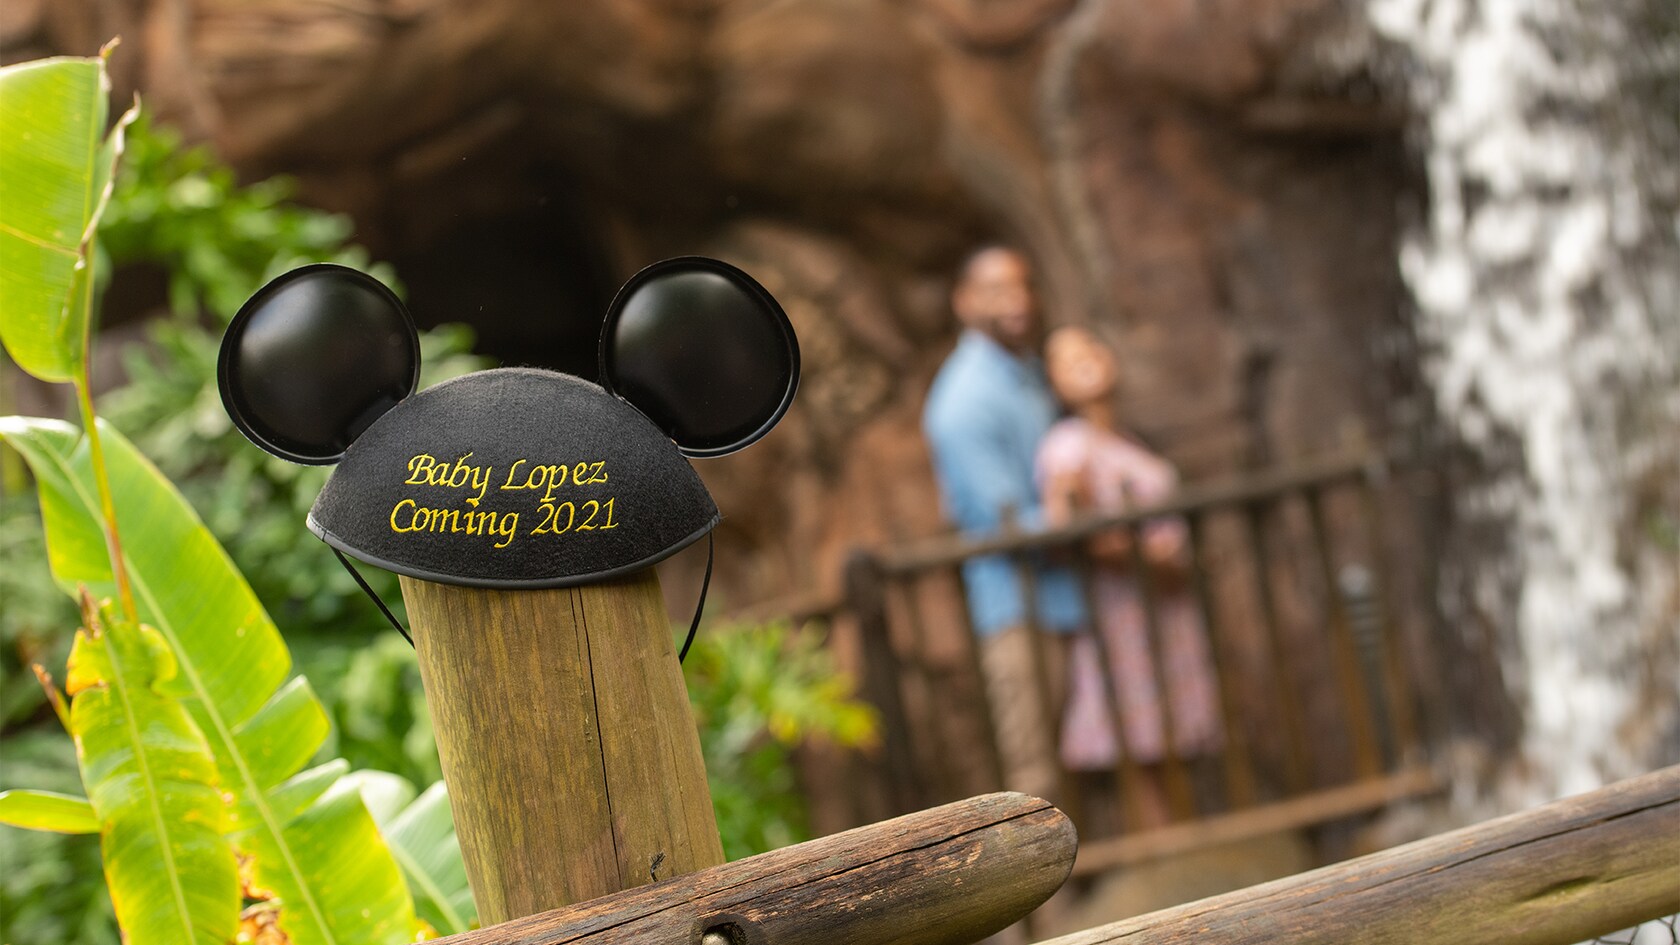 Capture Your Moment at Disney's Animal Kingdom Theme Park